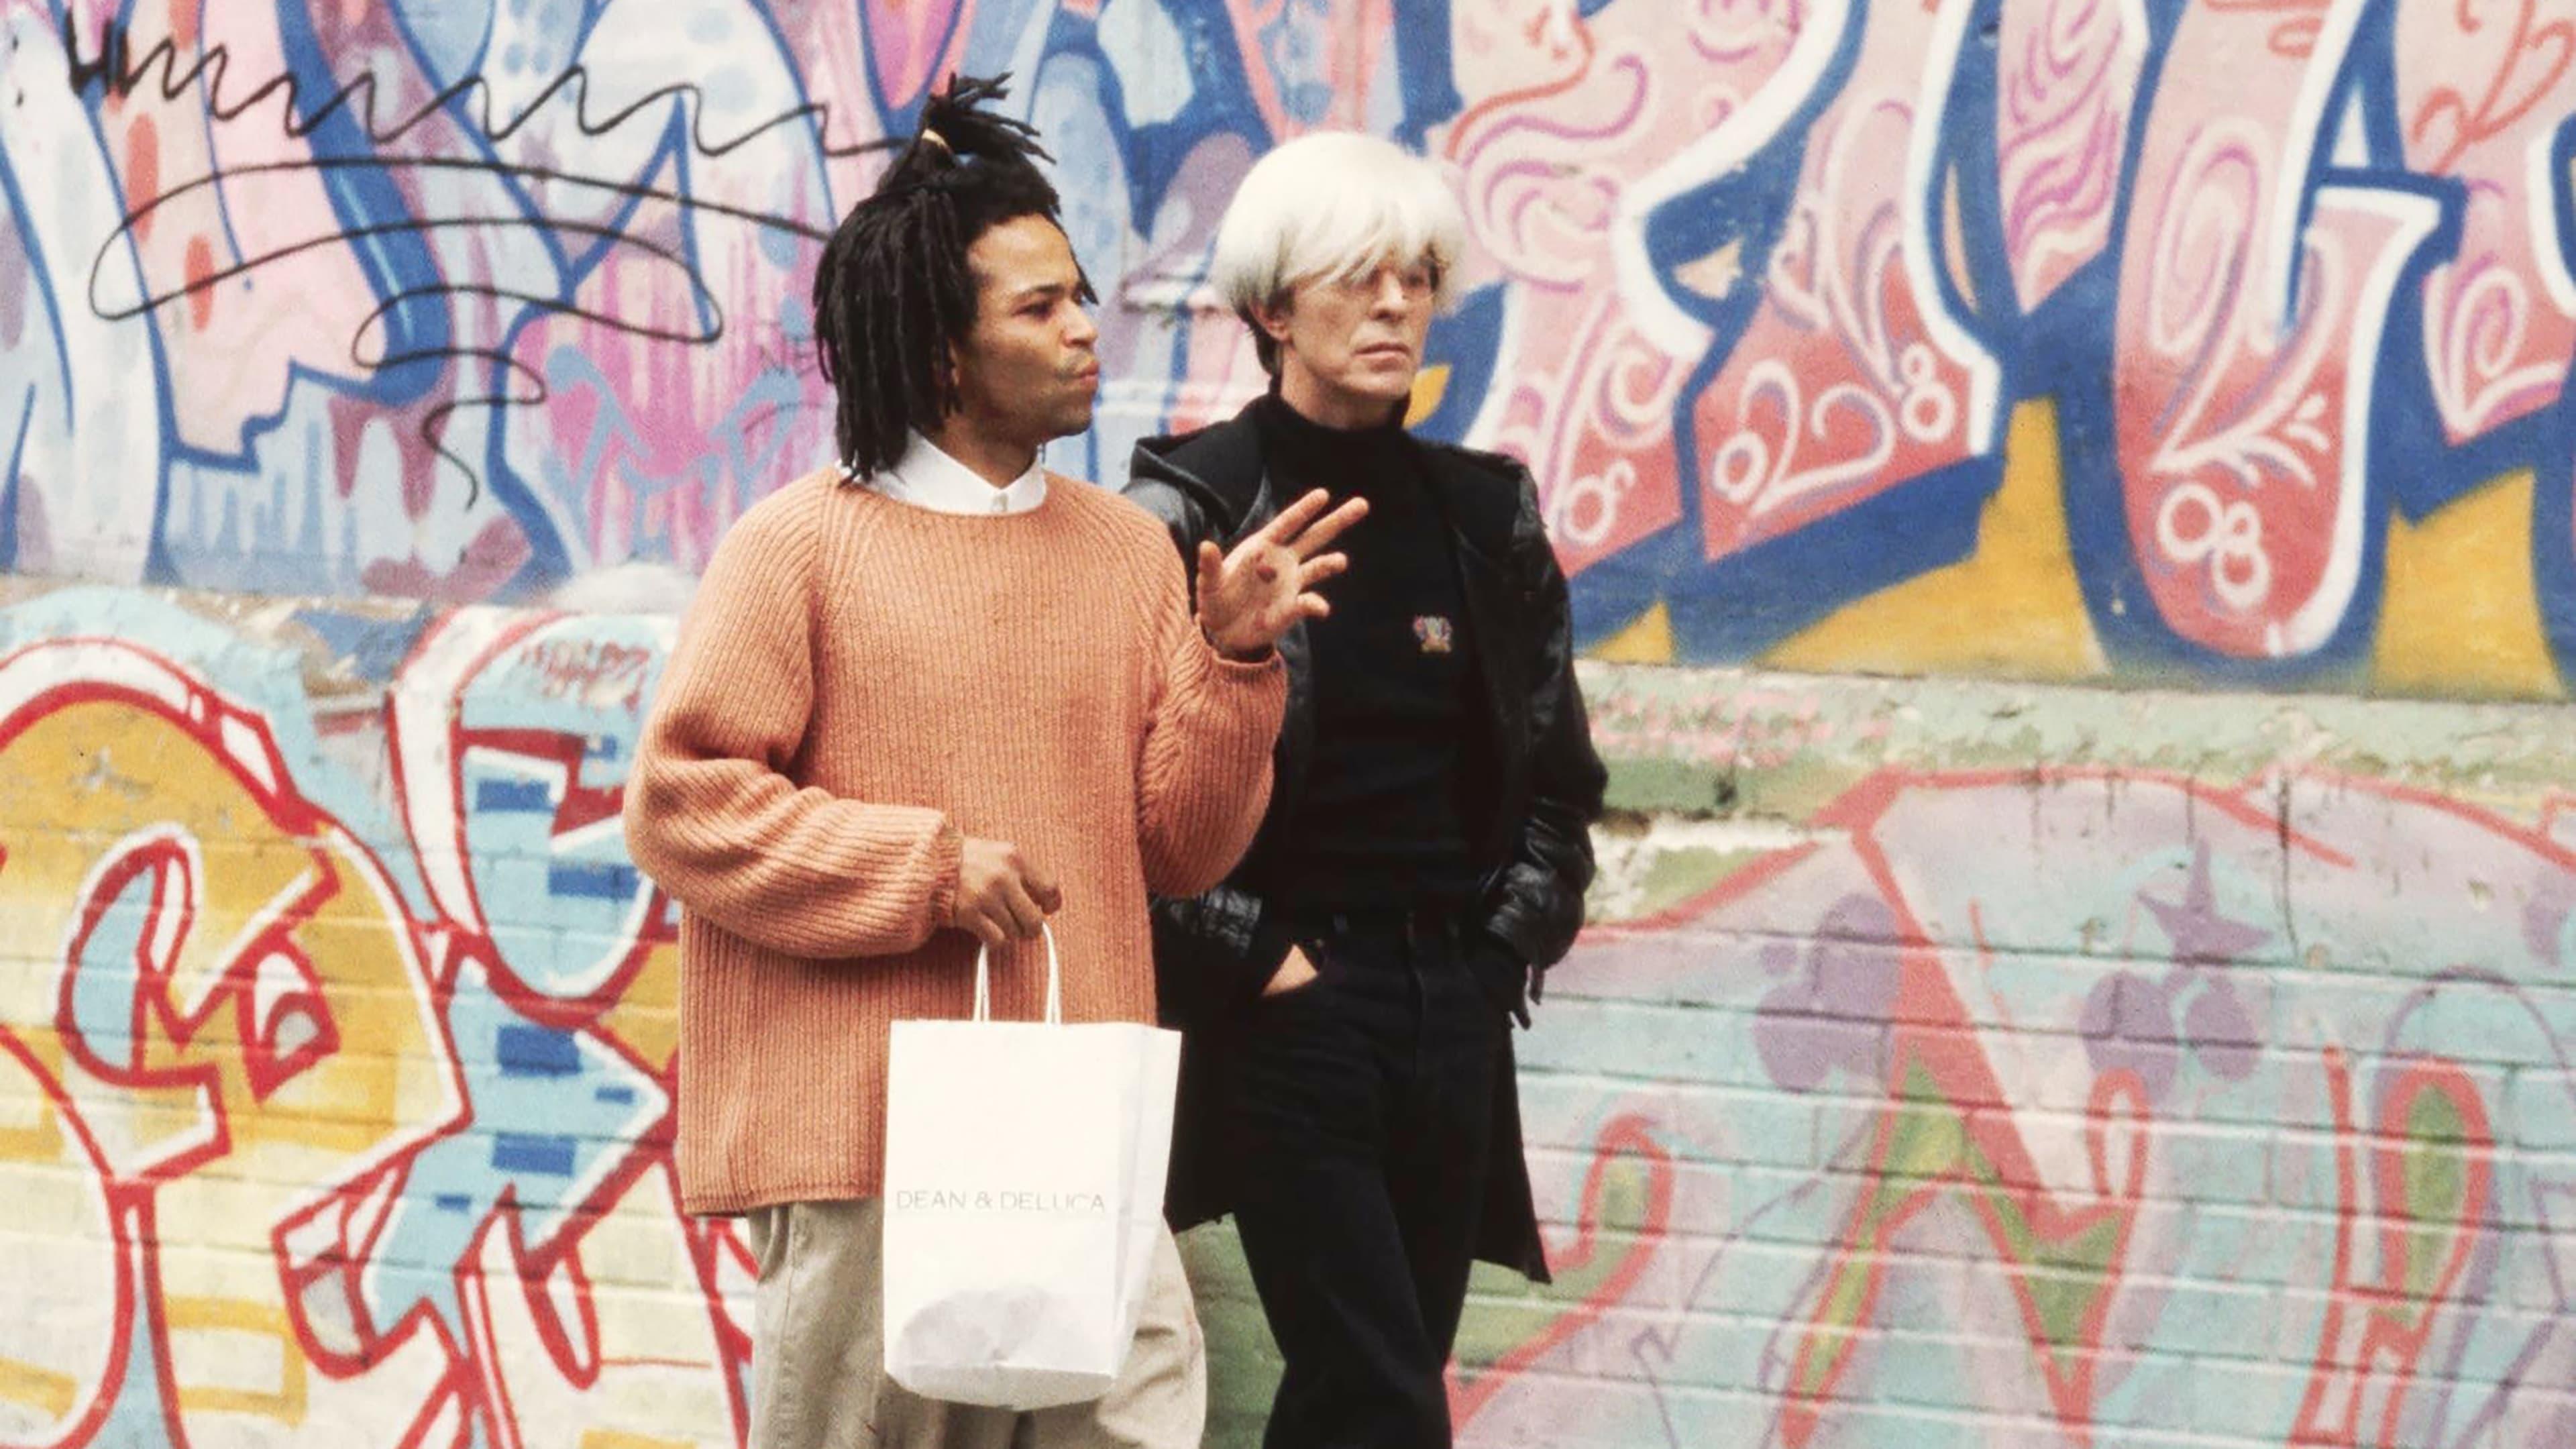 Basquiat backdrop